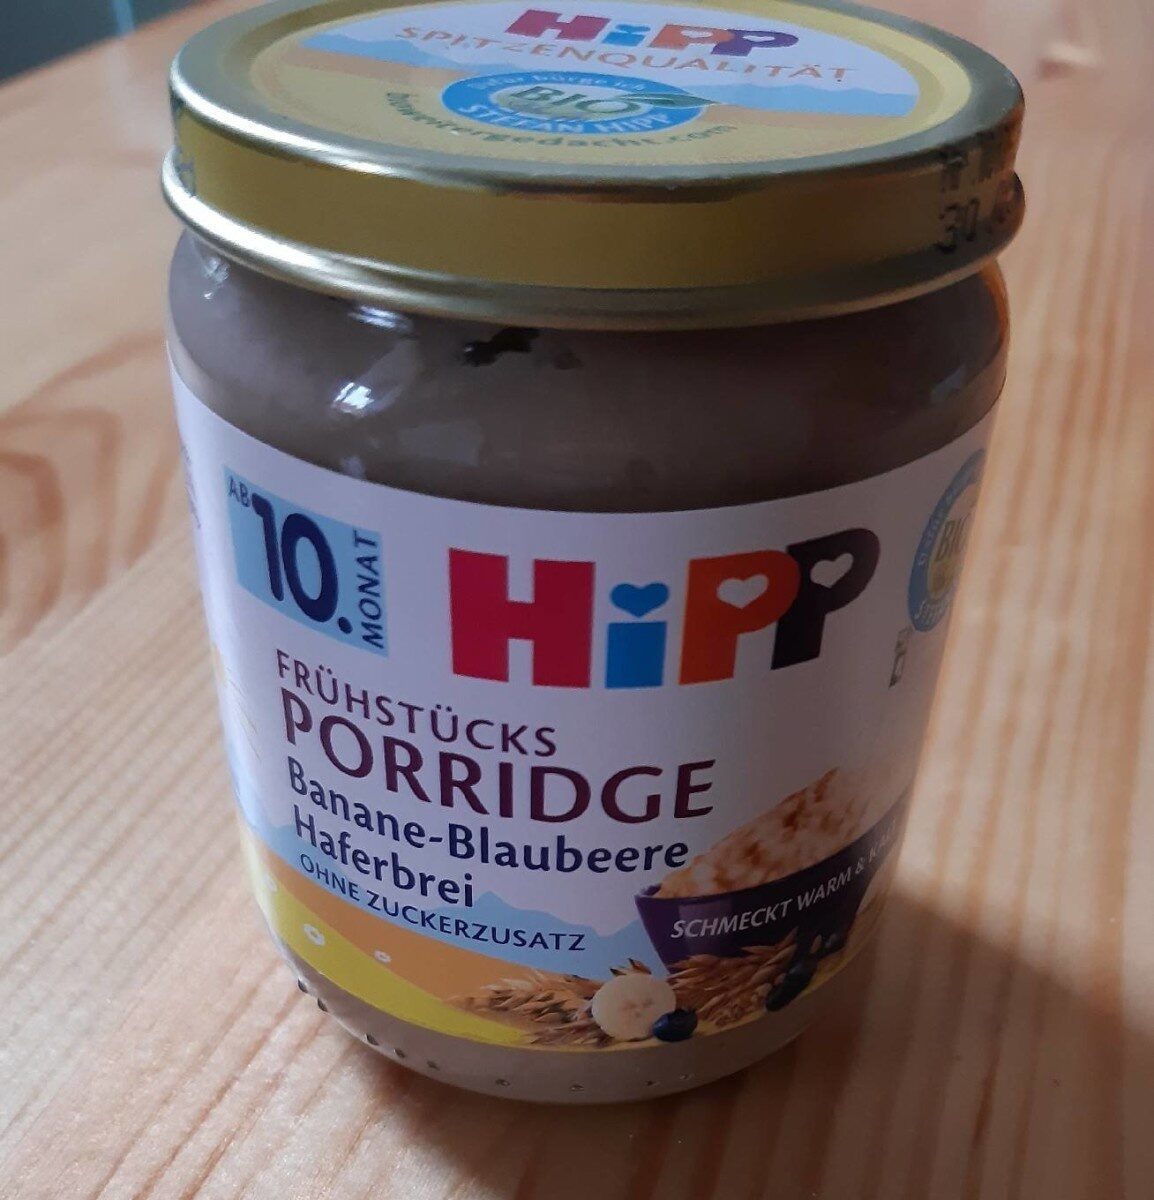 Frühstücks Porridge Banane Blaubeeren Haferbrei - Produkt - en